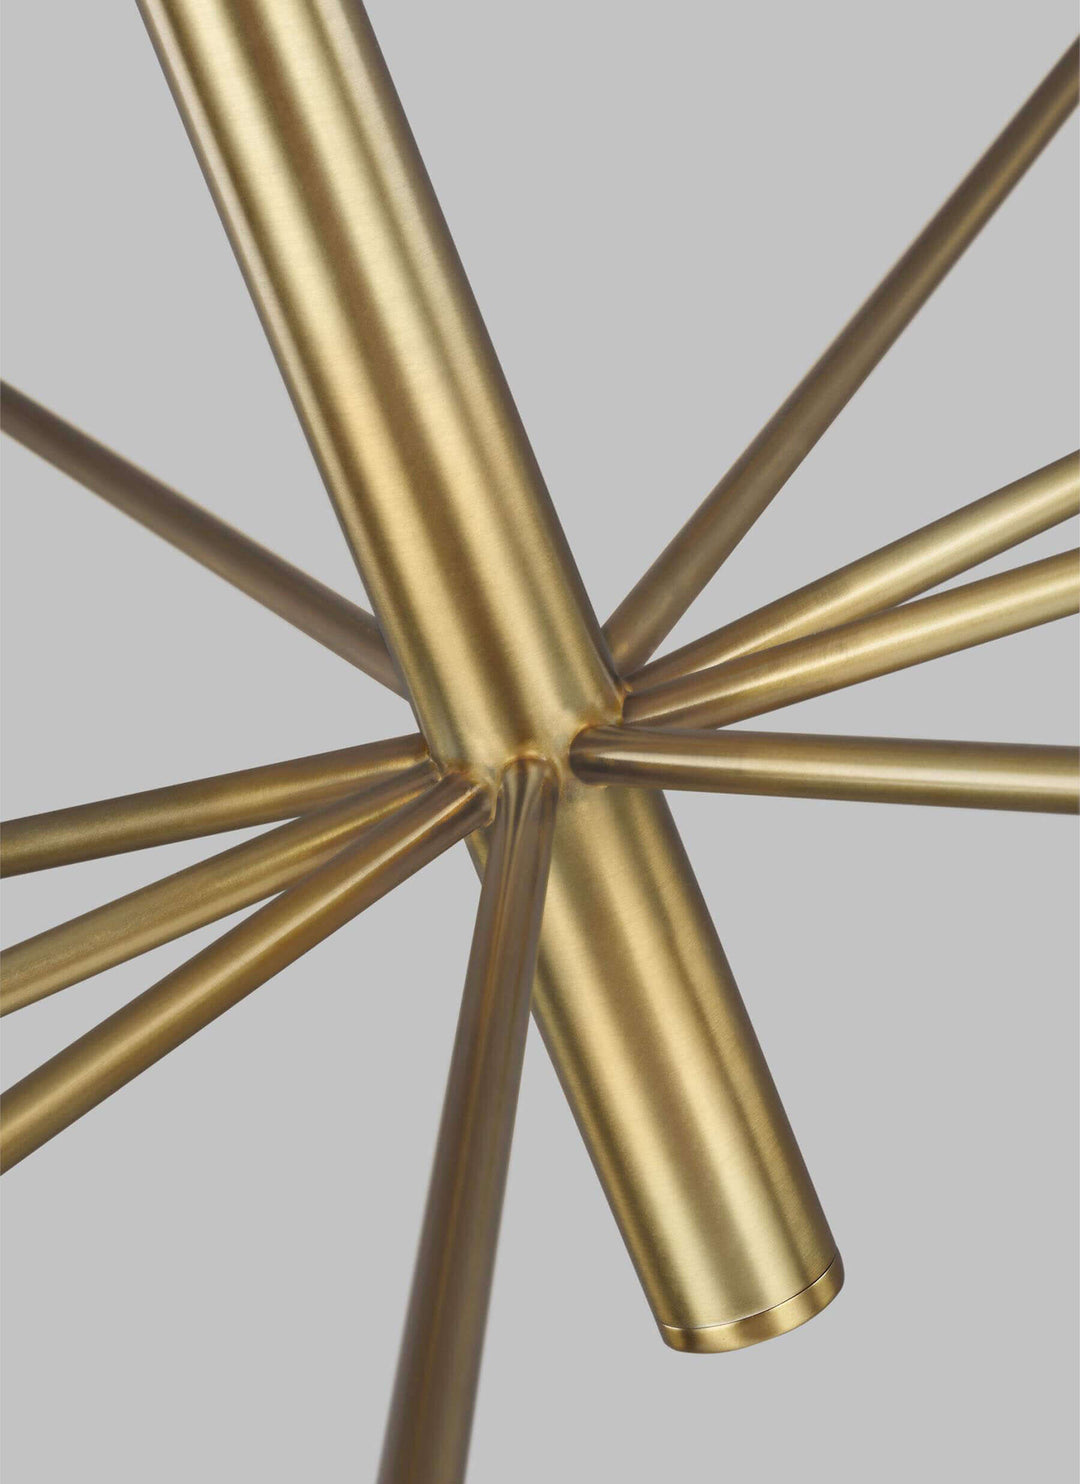 Arm details on the burnished brass modern chandelier.